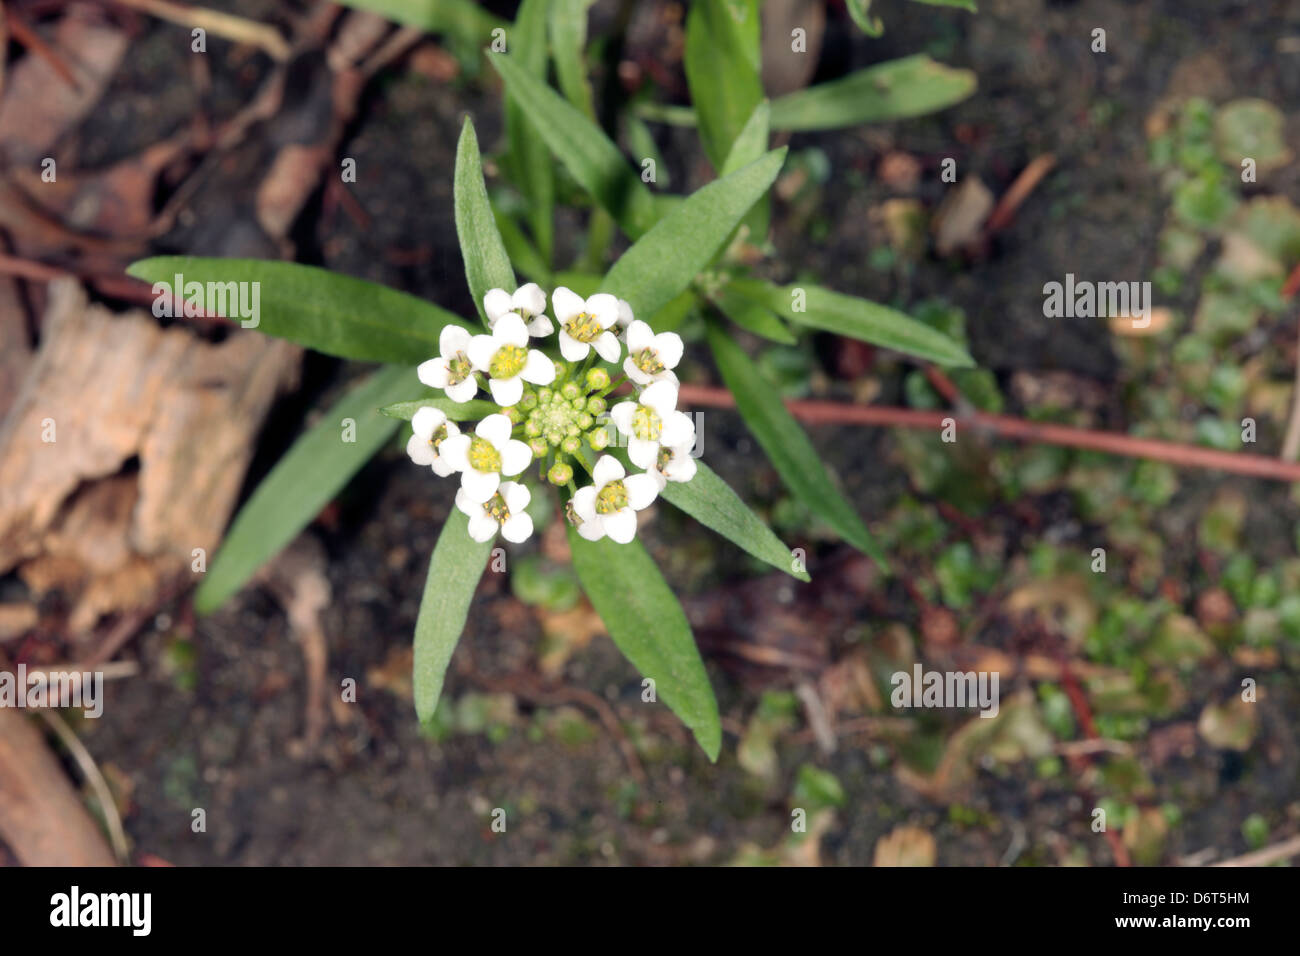 Close-up of Alyssum showing details of flower head- Alyssum maritima  [syn. A maritimum]- Family Brassicaceae Stock Photo